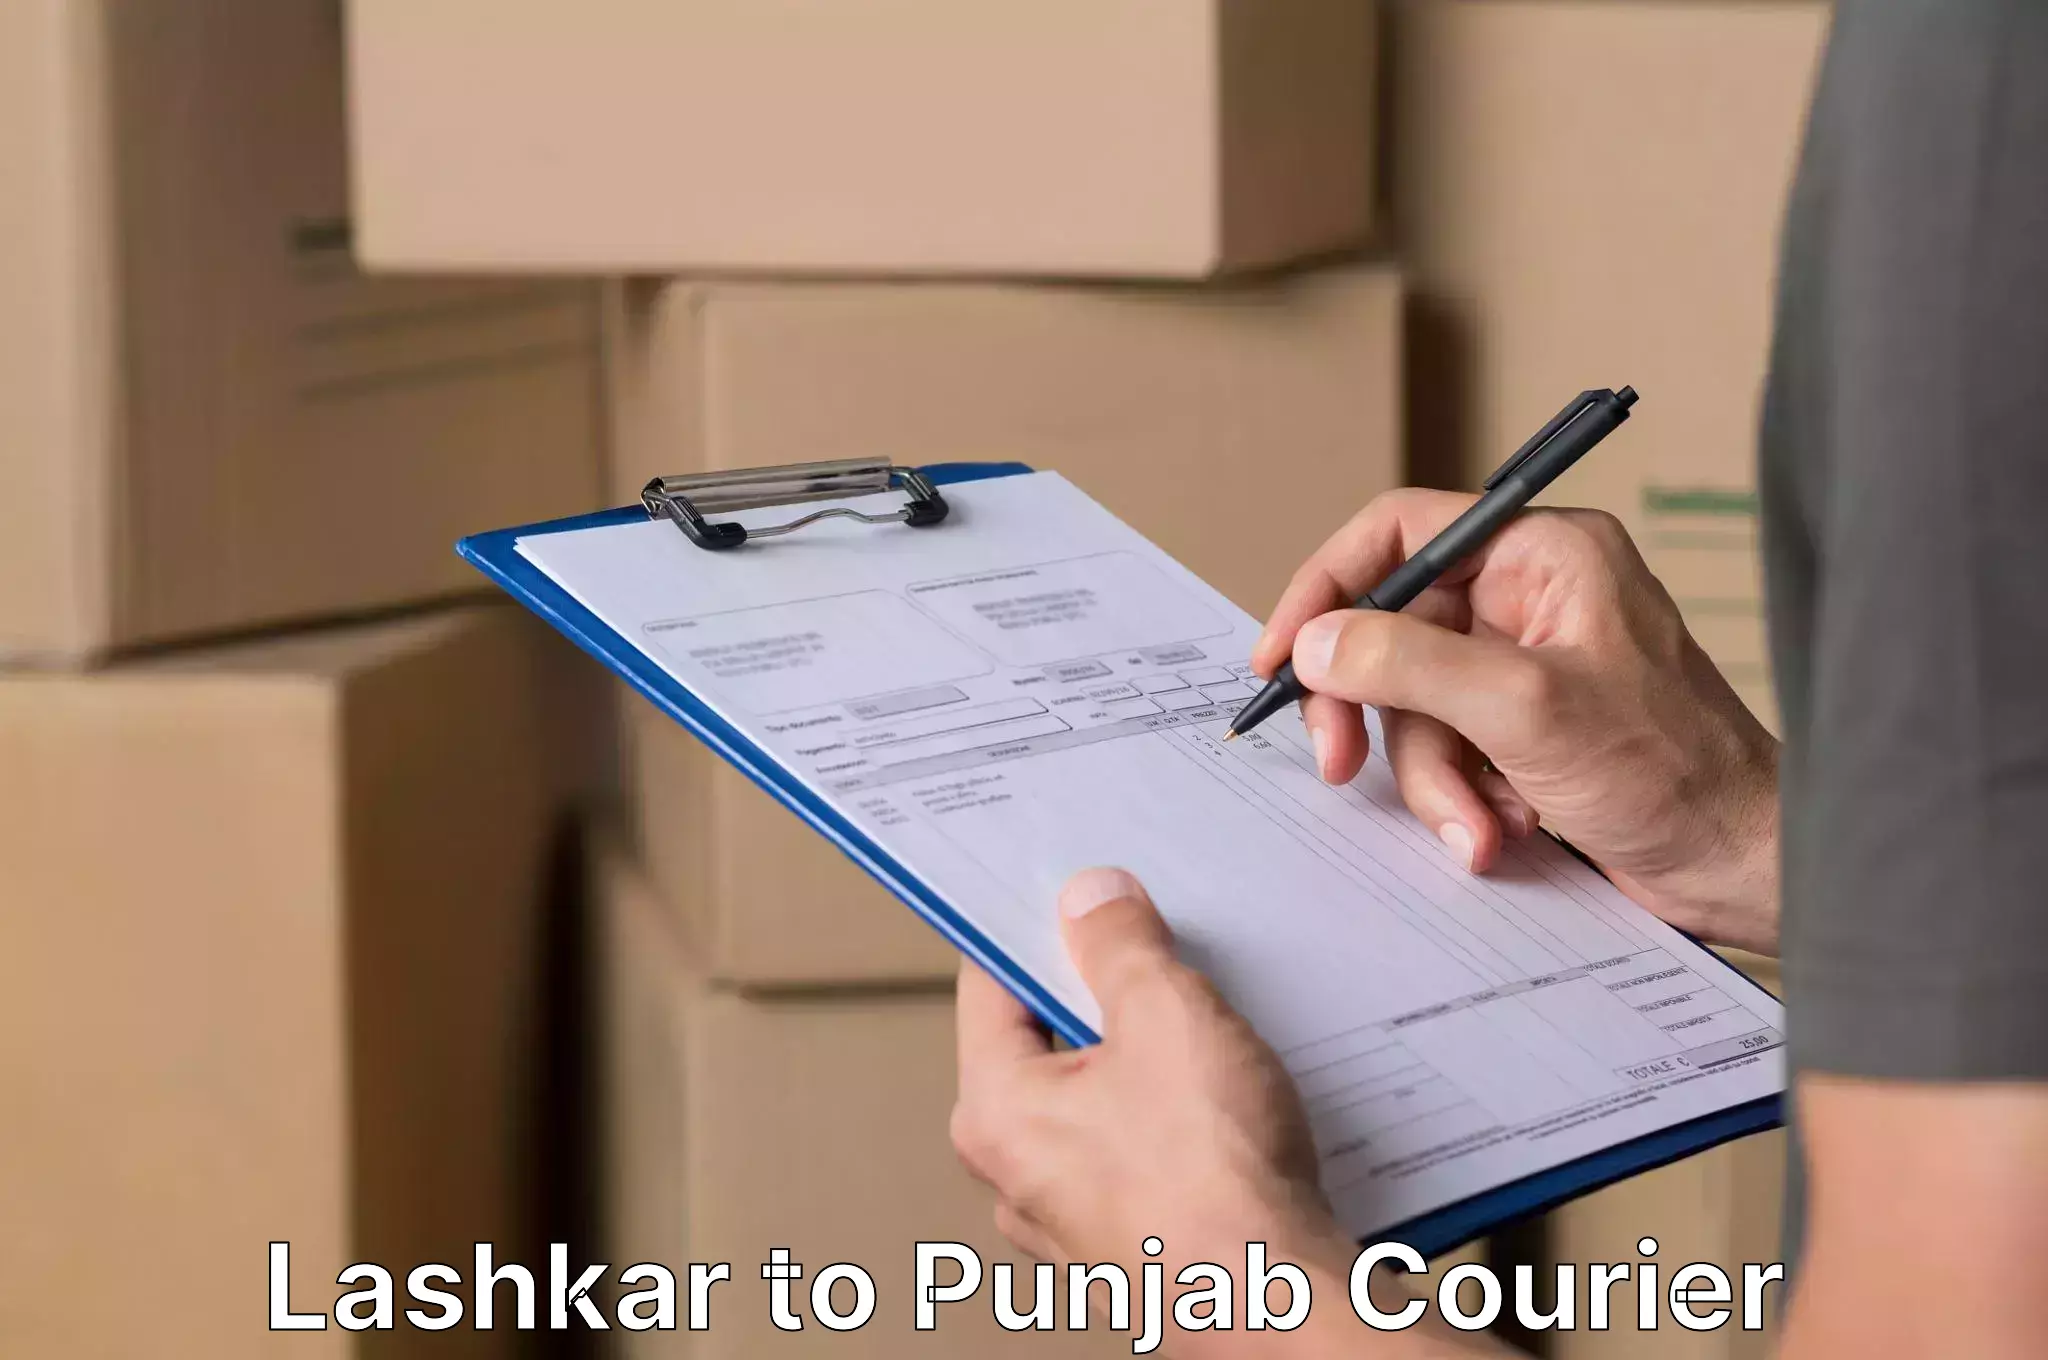 Professional moving company Lashkar to Punjab